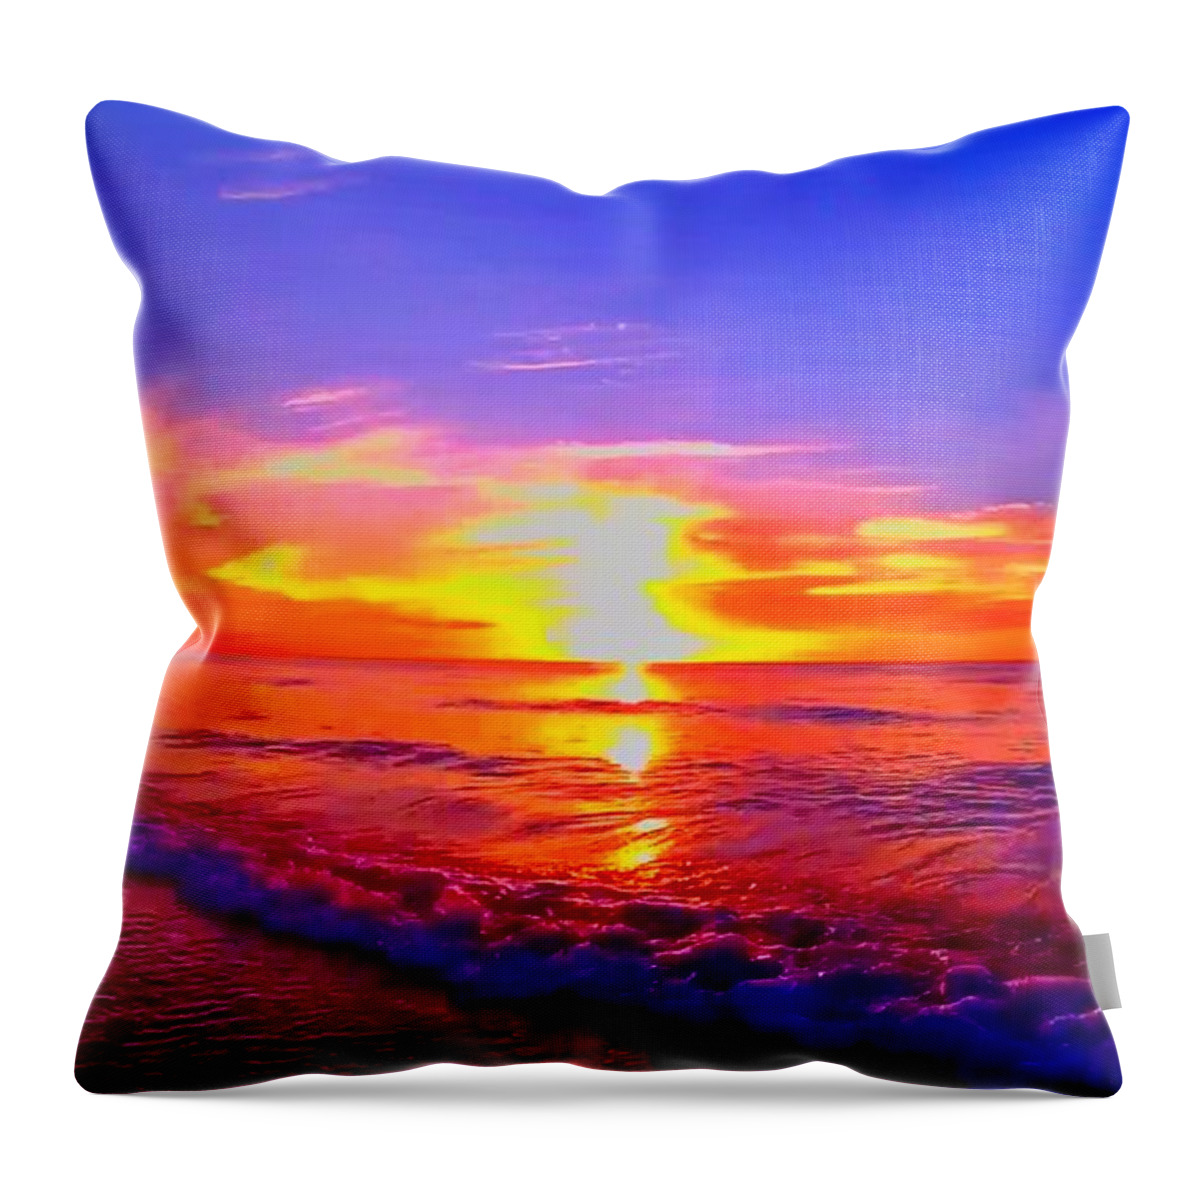 Sunrise Throw Pillow featuring the photograph Sunrise Beach 27 by Rip Read